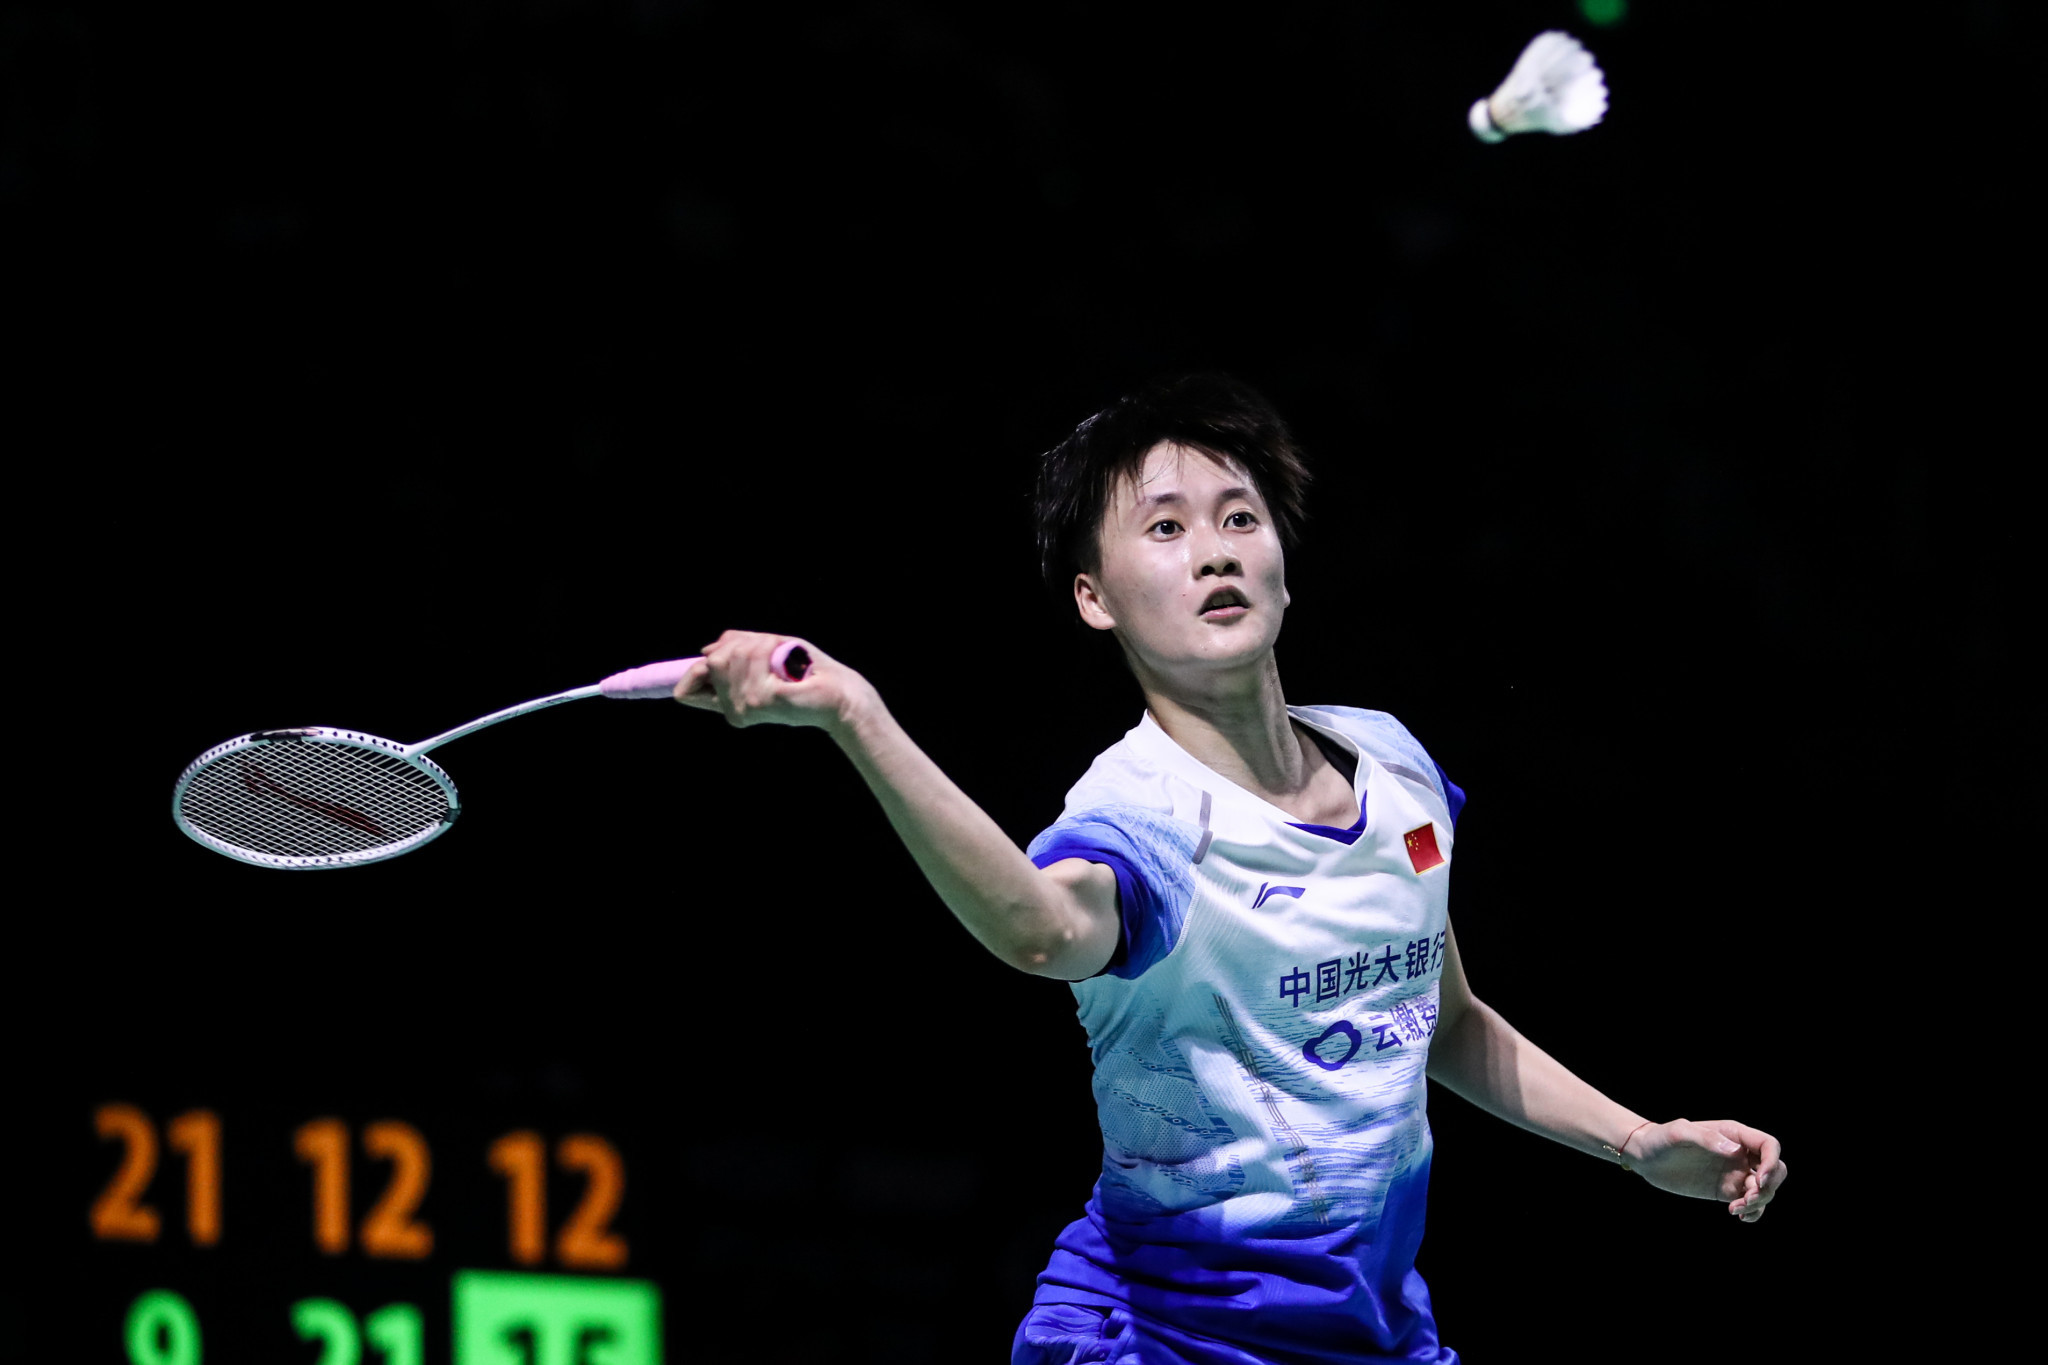 Chen Yufei won the women's title in Hong Kong ©Getty Images